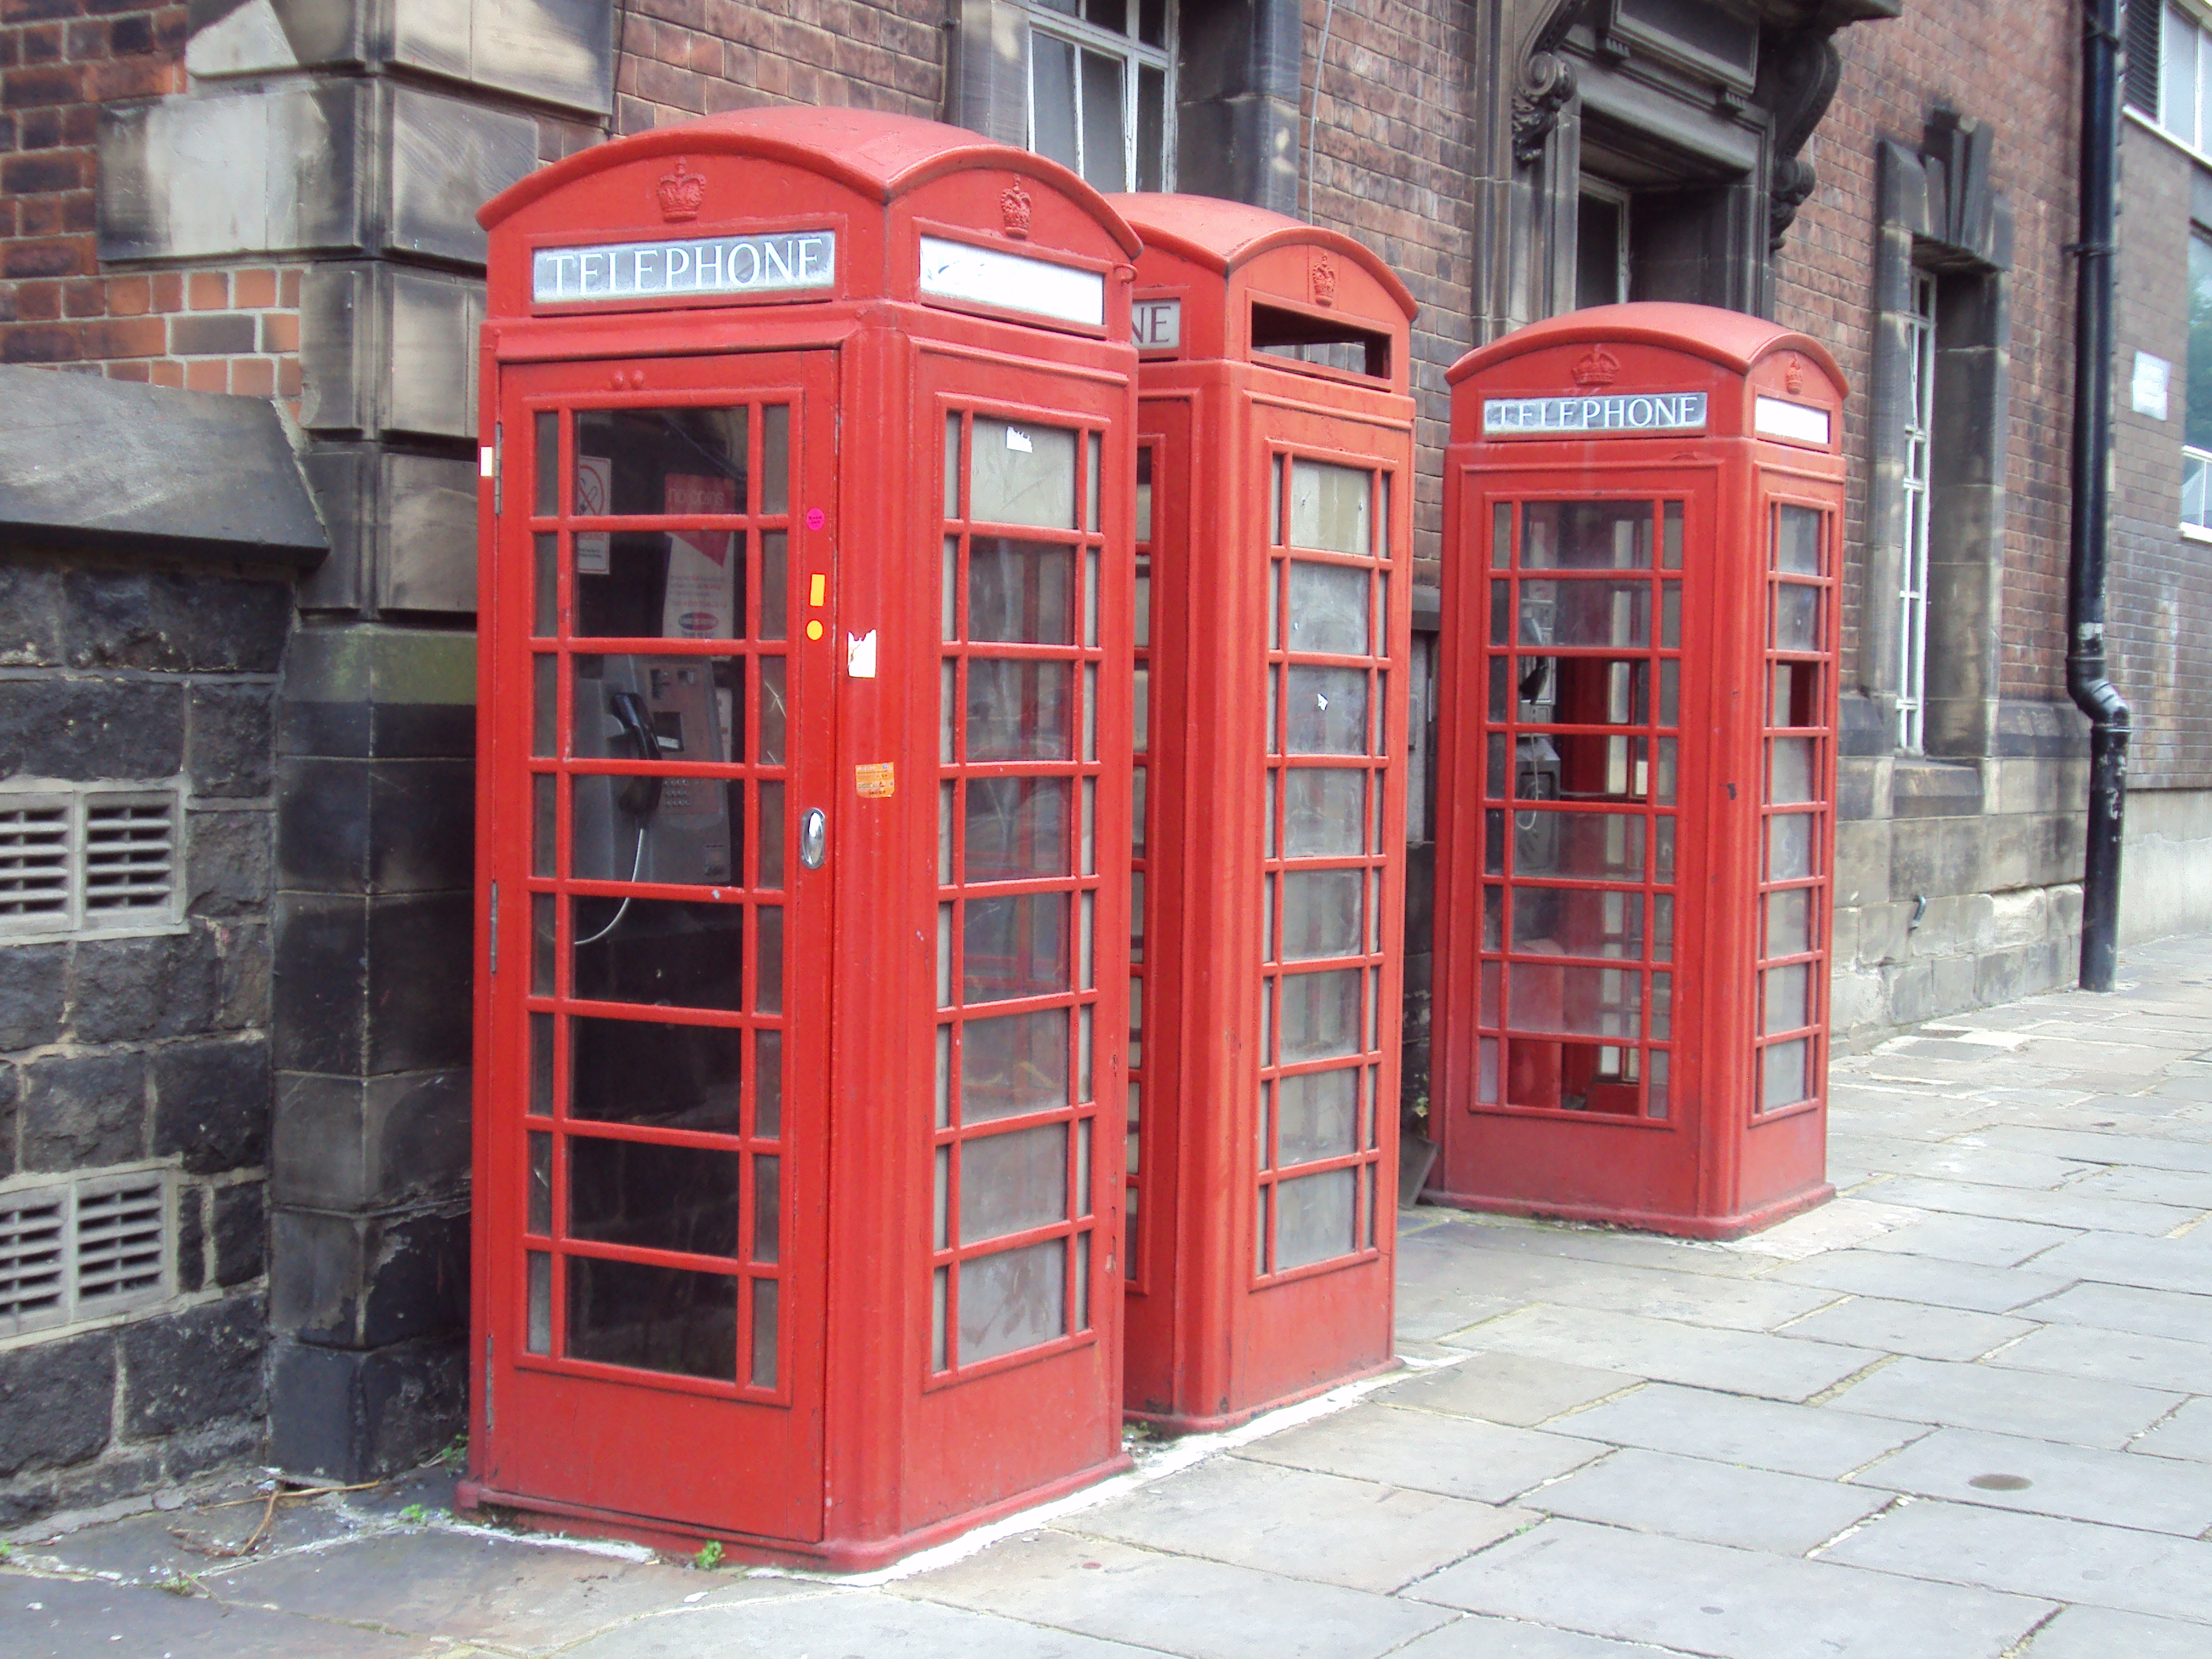 File:Phone booths, Headingley Lane, Leeds - DSC07648.JPG - Wikimedia ...